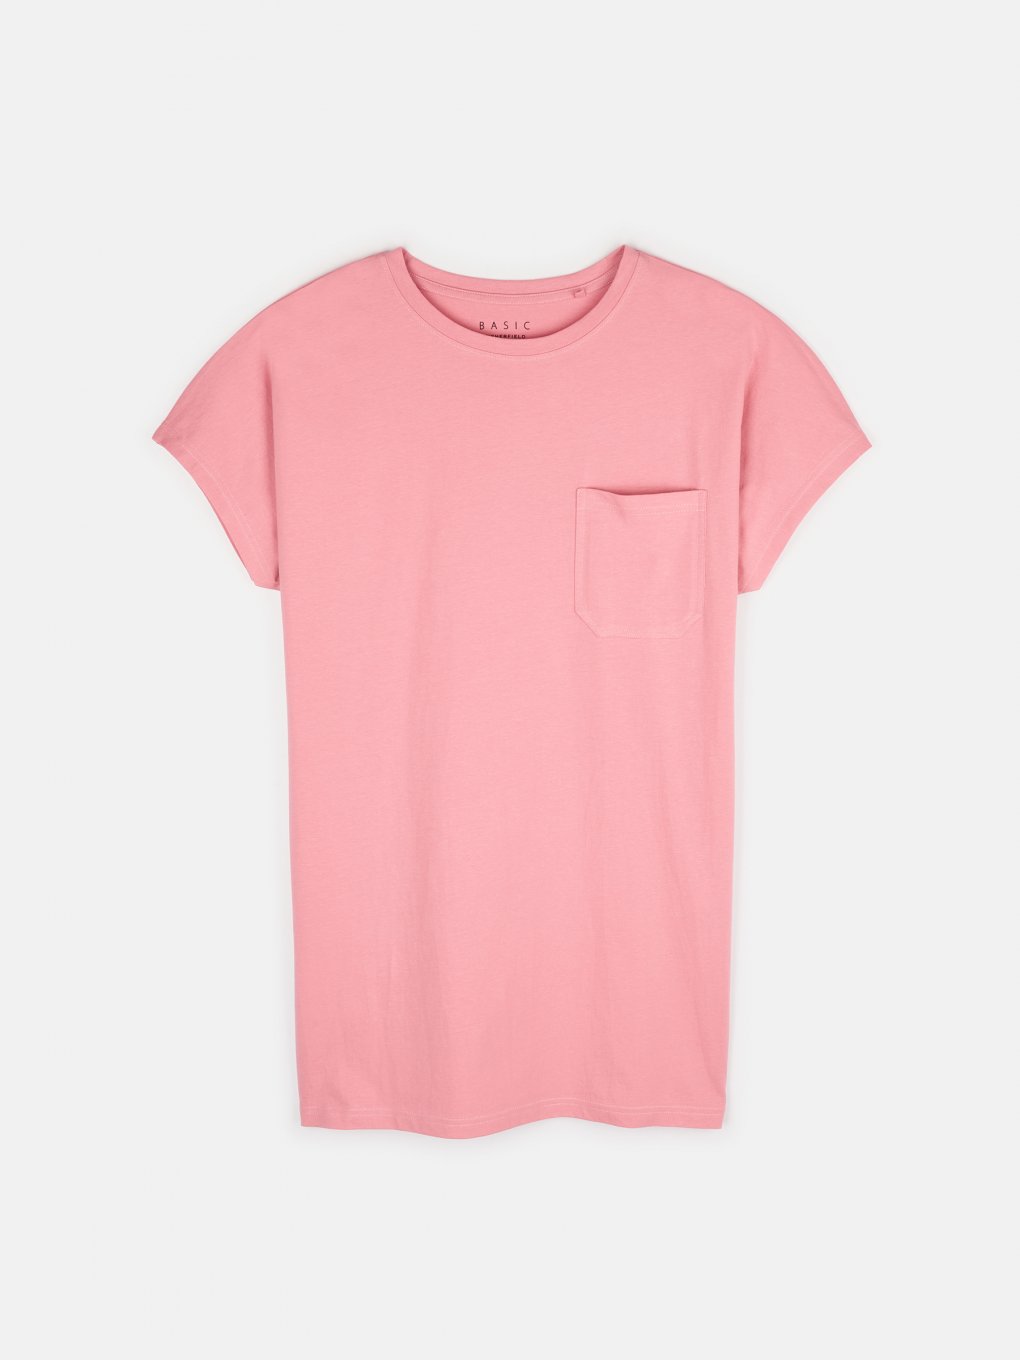 Basic longline t-shirt with pocket and side slits